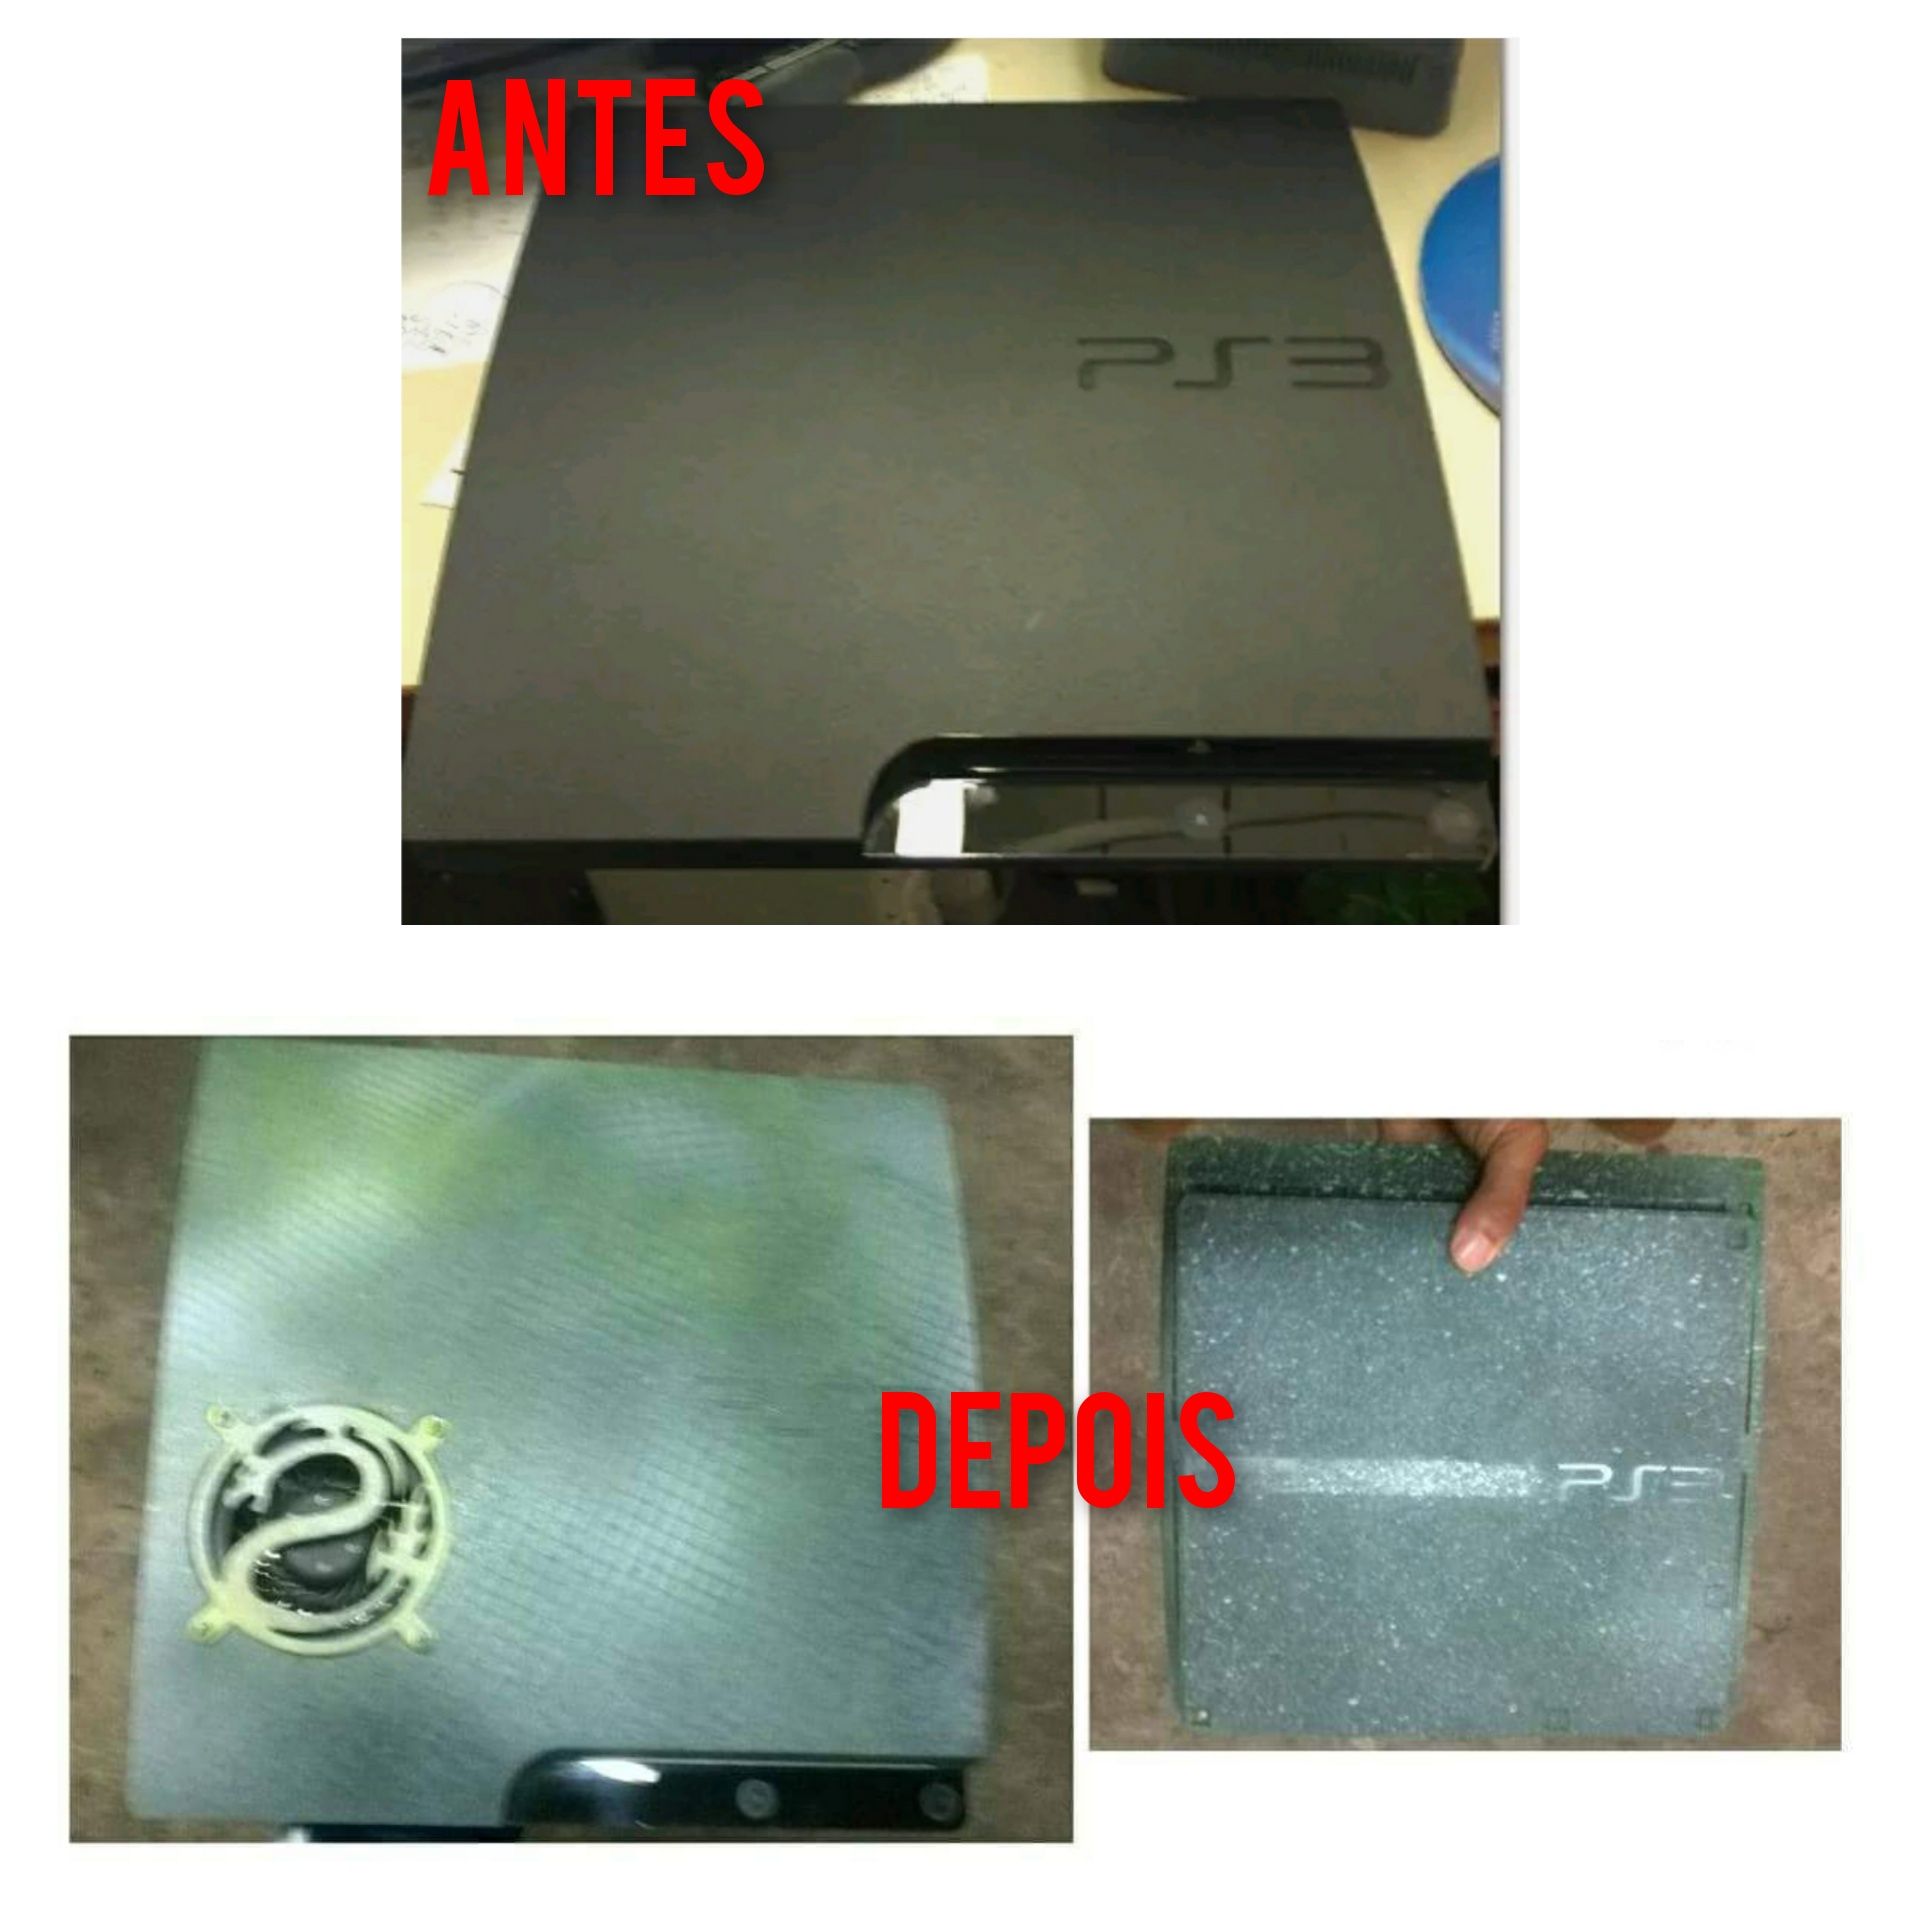 Personalizaçao e limpeza de Consola Sony Playstation 3 / ps3